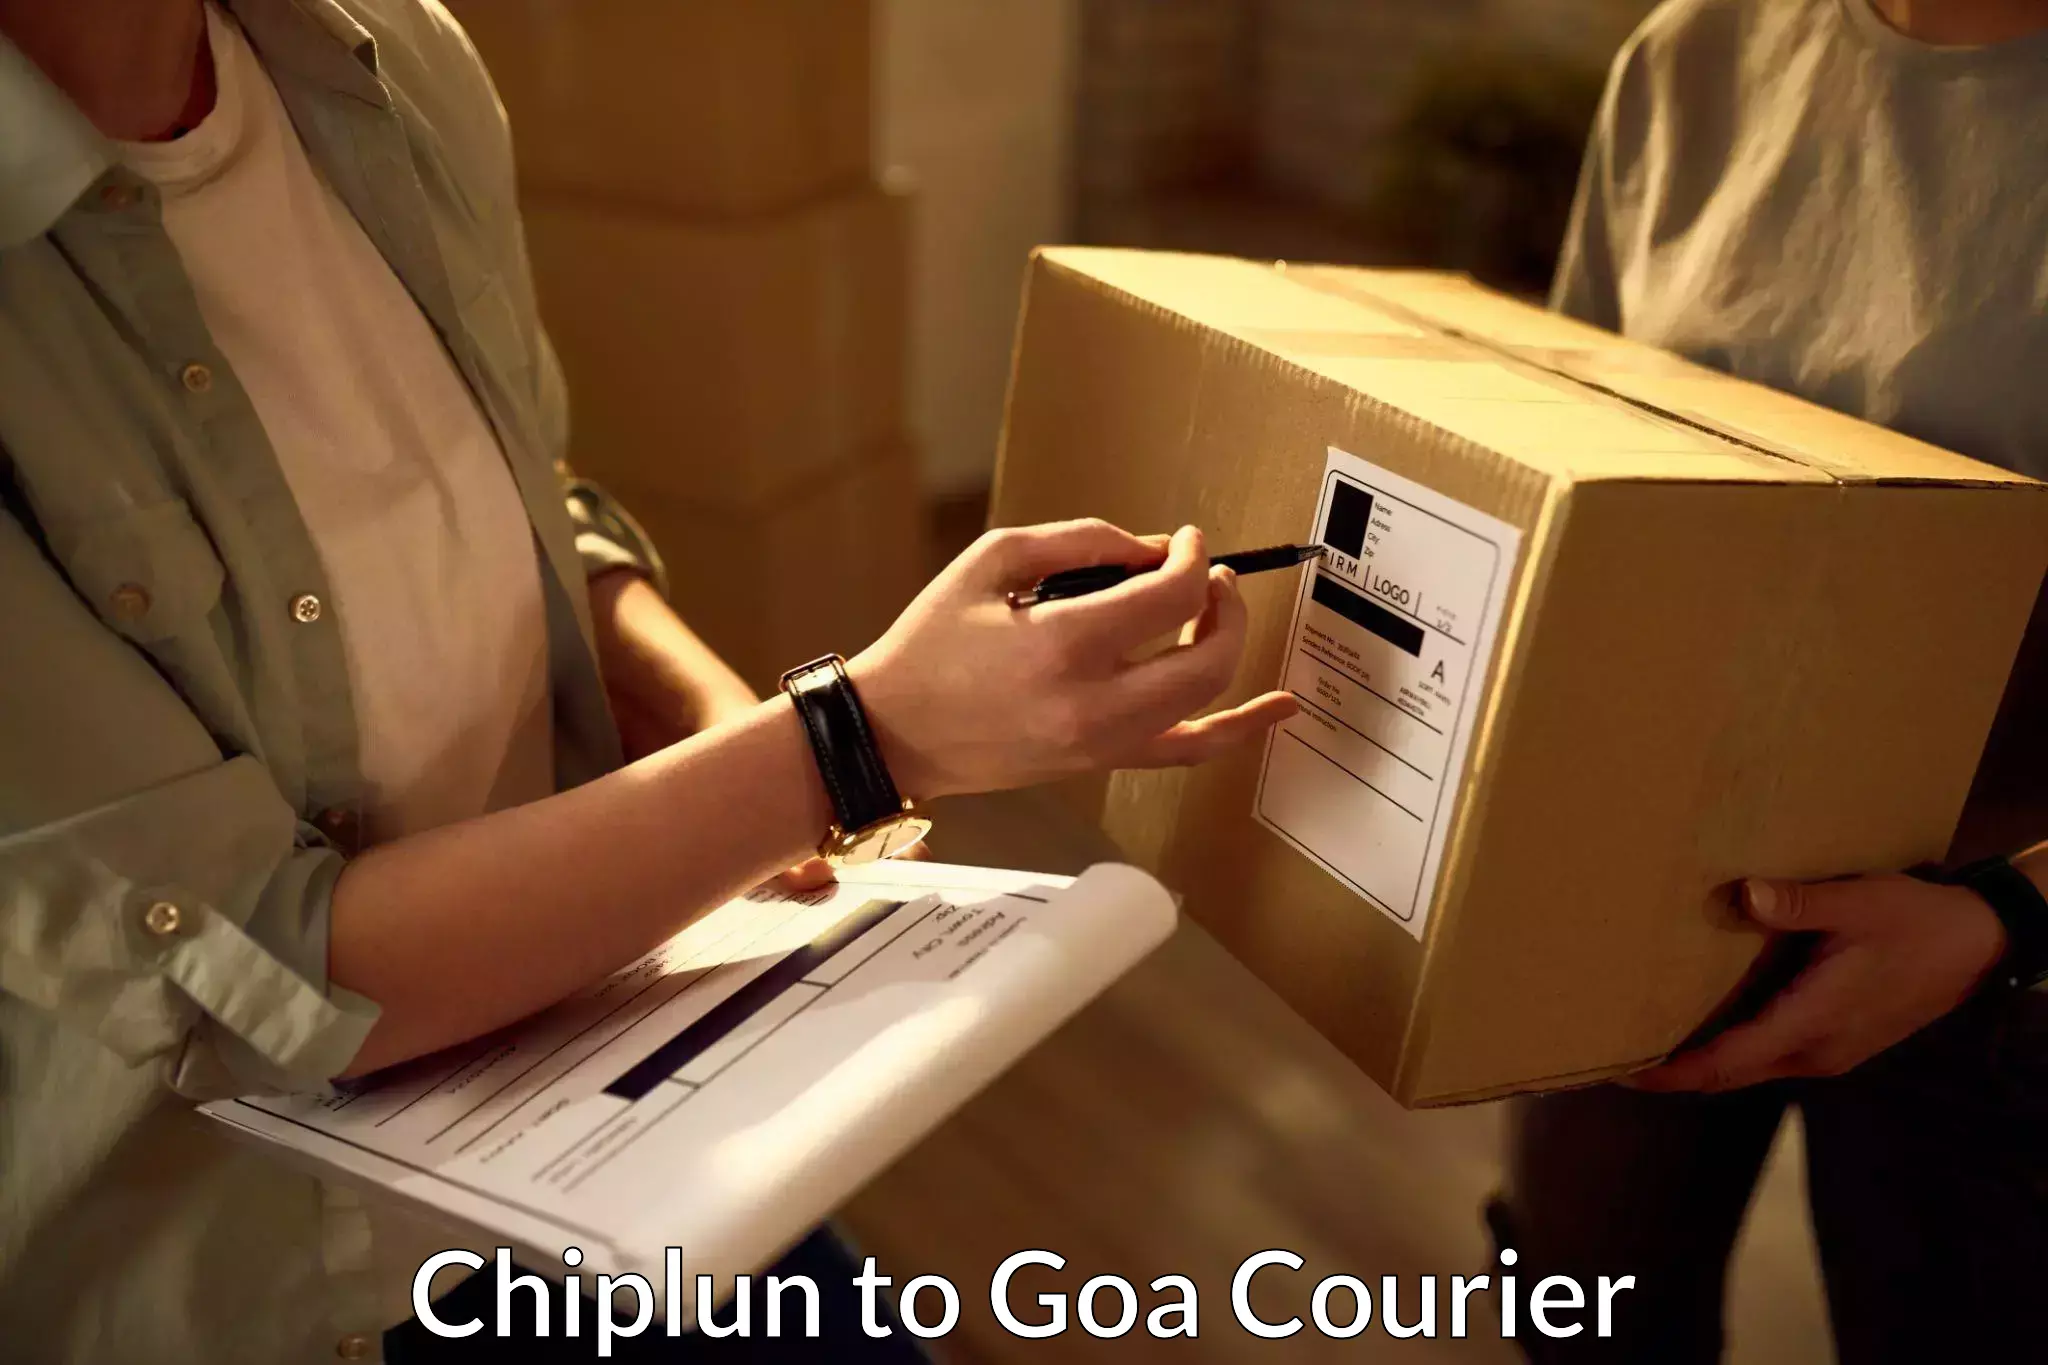 Courier service comparison Chiplun to Goa